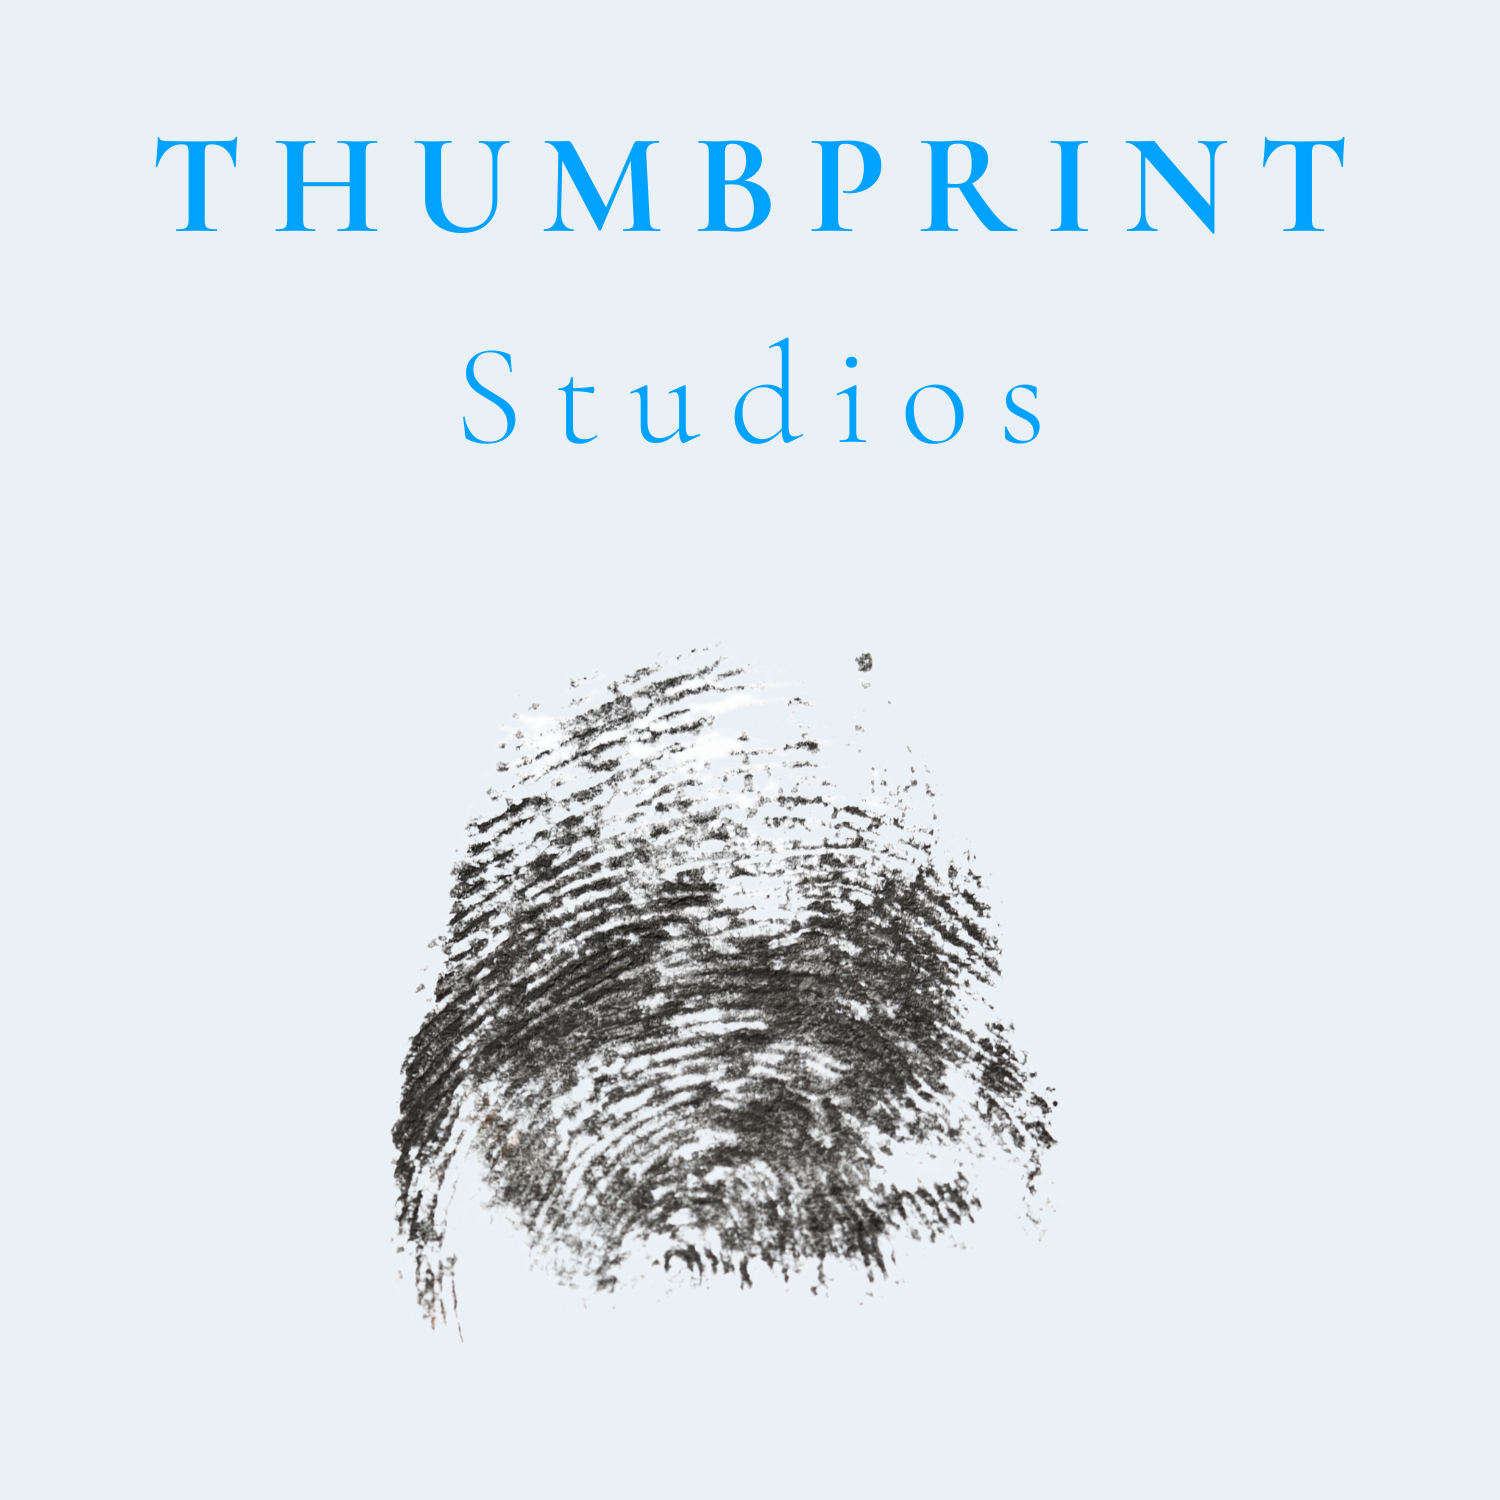 Thumbprint Studios